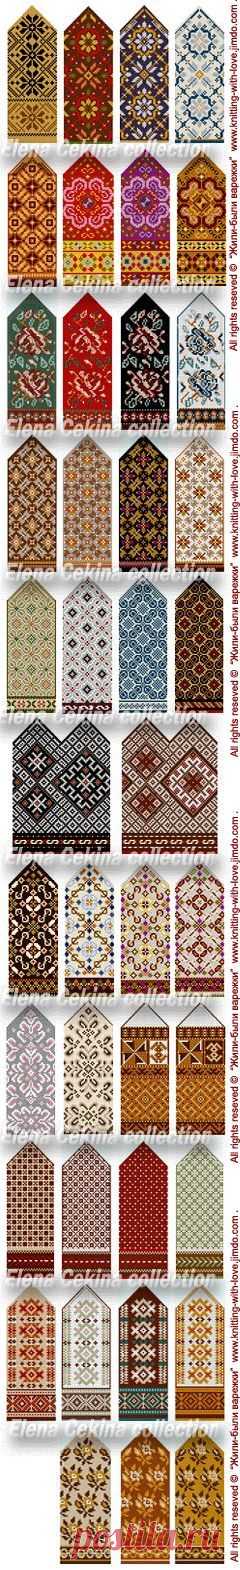 Латышские варежки, вязание варежек, схемы для варежек, жаккардовый узор, Latvian mittens, Fair isle knitting, ornament, color pattern